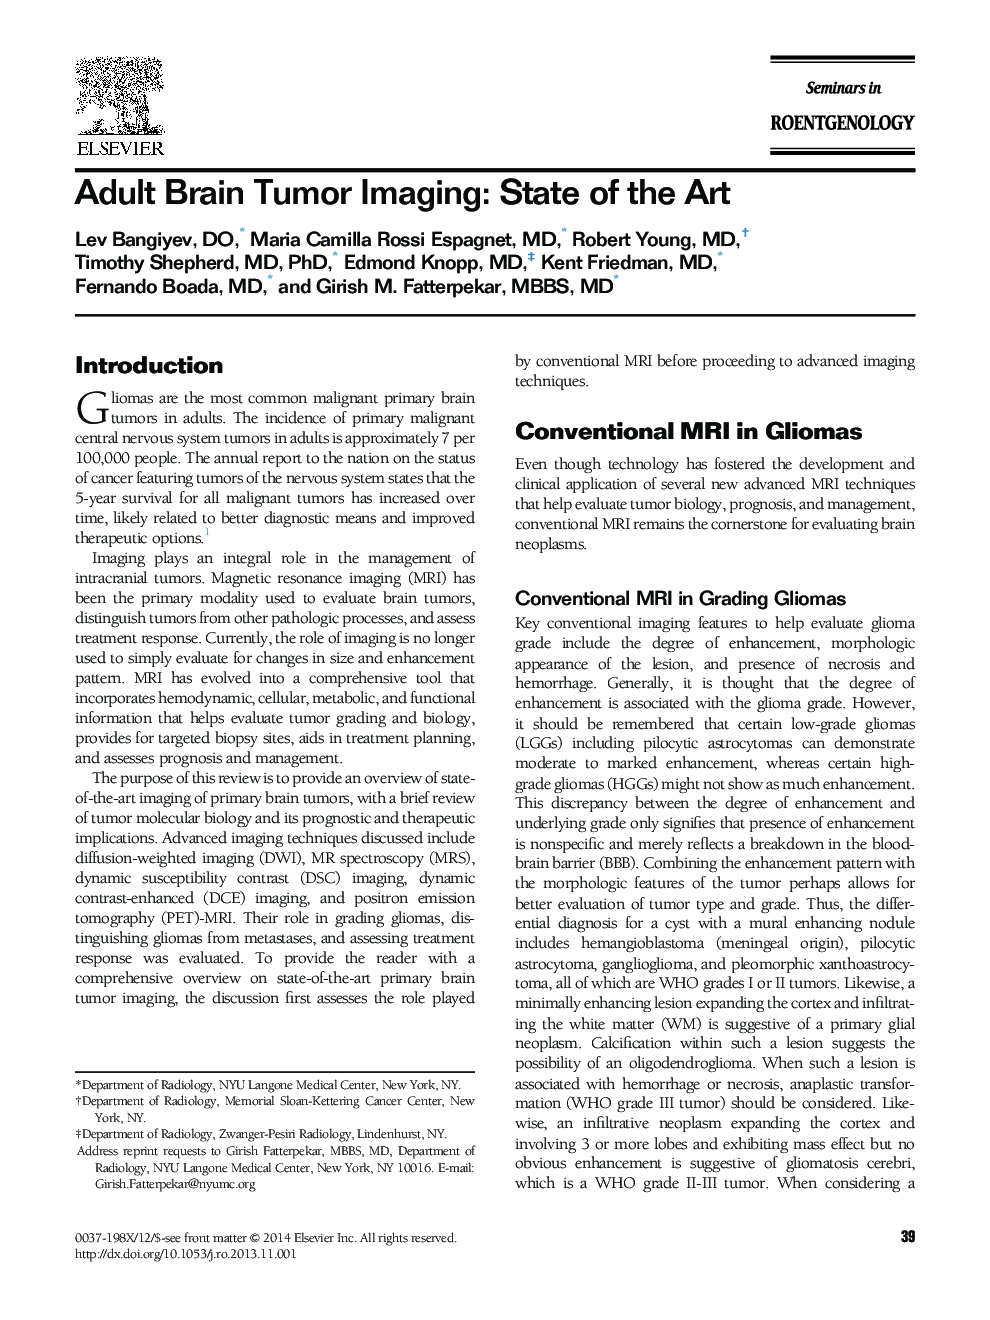 Adult Brain Tumor Imaging: State of the Art